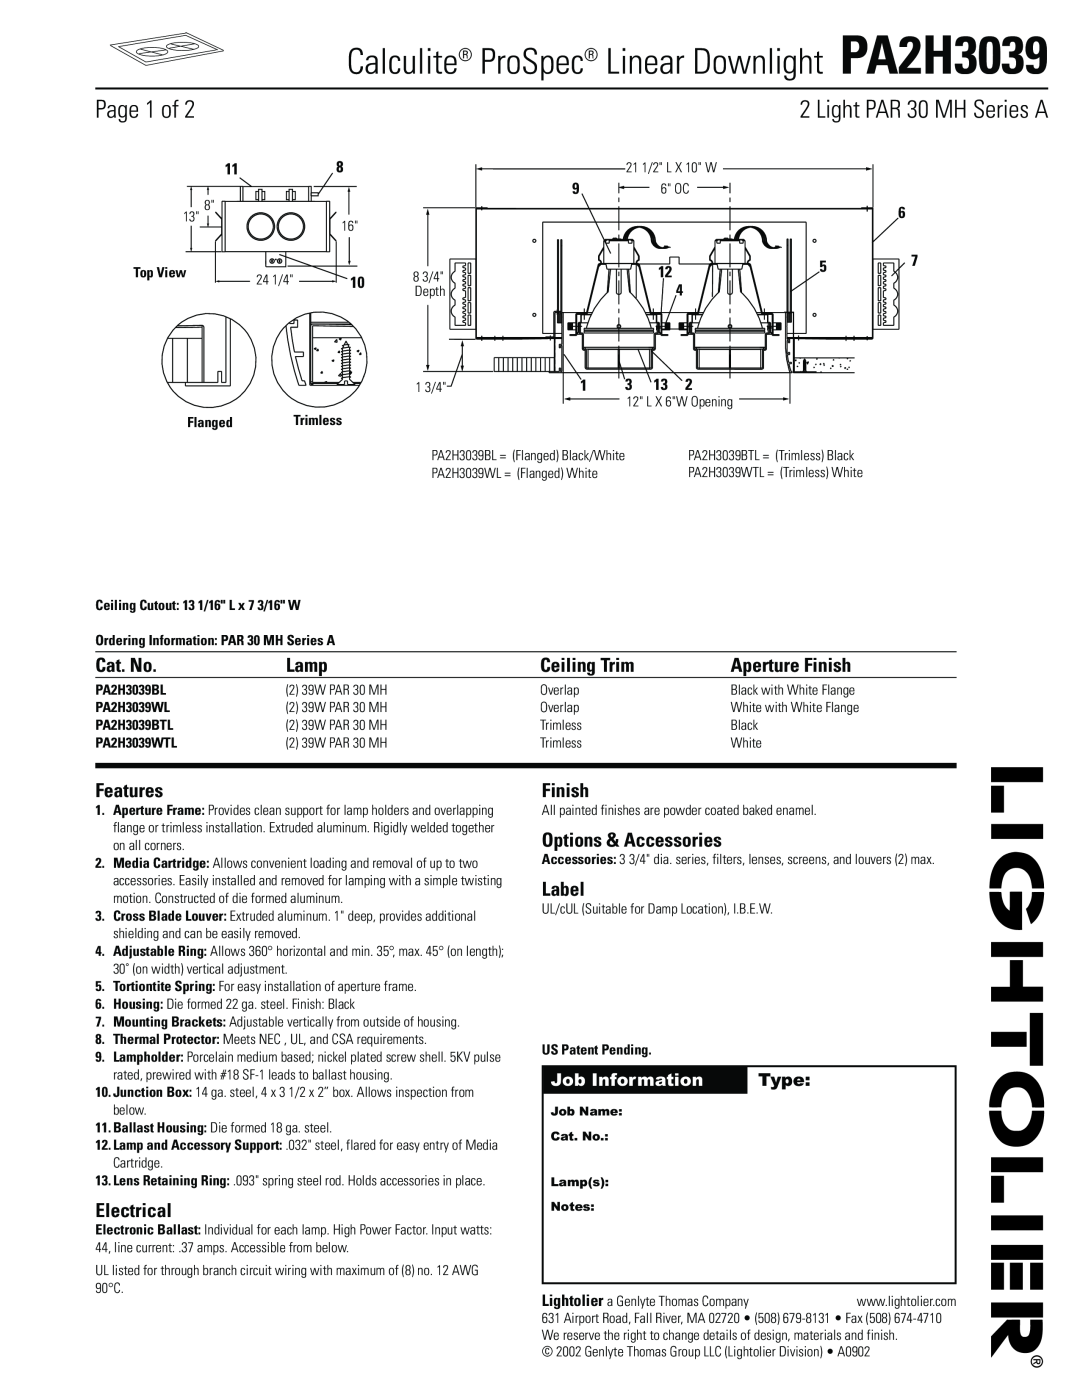 Lightolier PA2H3039 manual Page 1 of, Light PAR 30 MH Series A, Cat. No, Lamp, Ceiling Trim, Aperture Finish, Features 